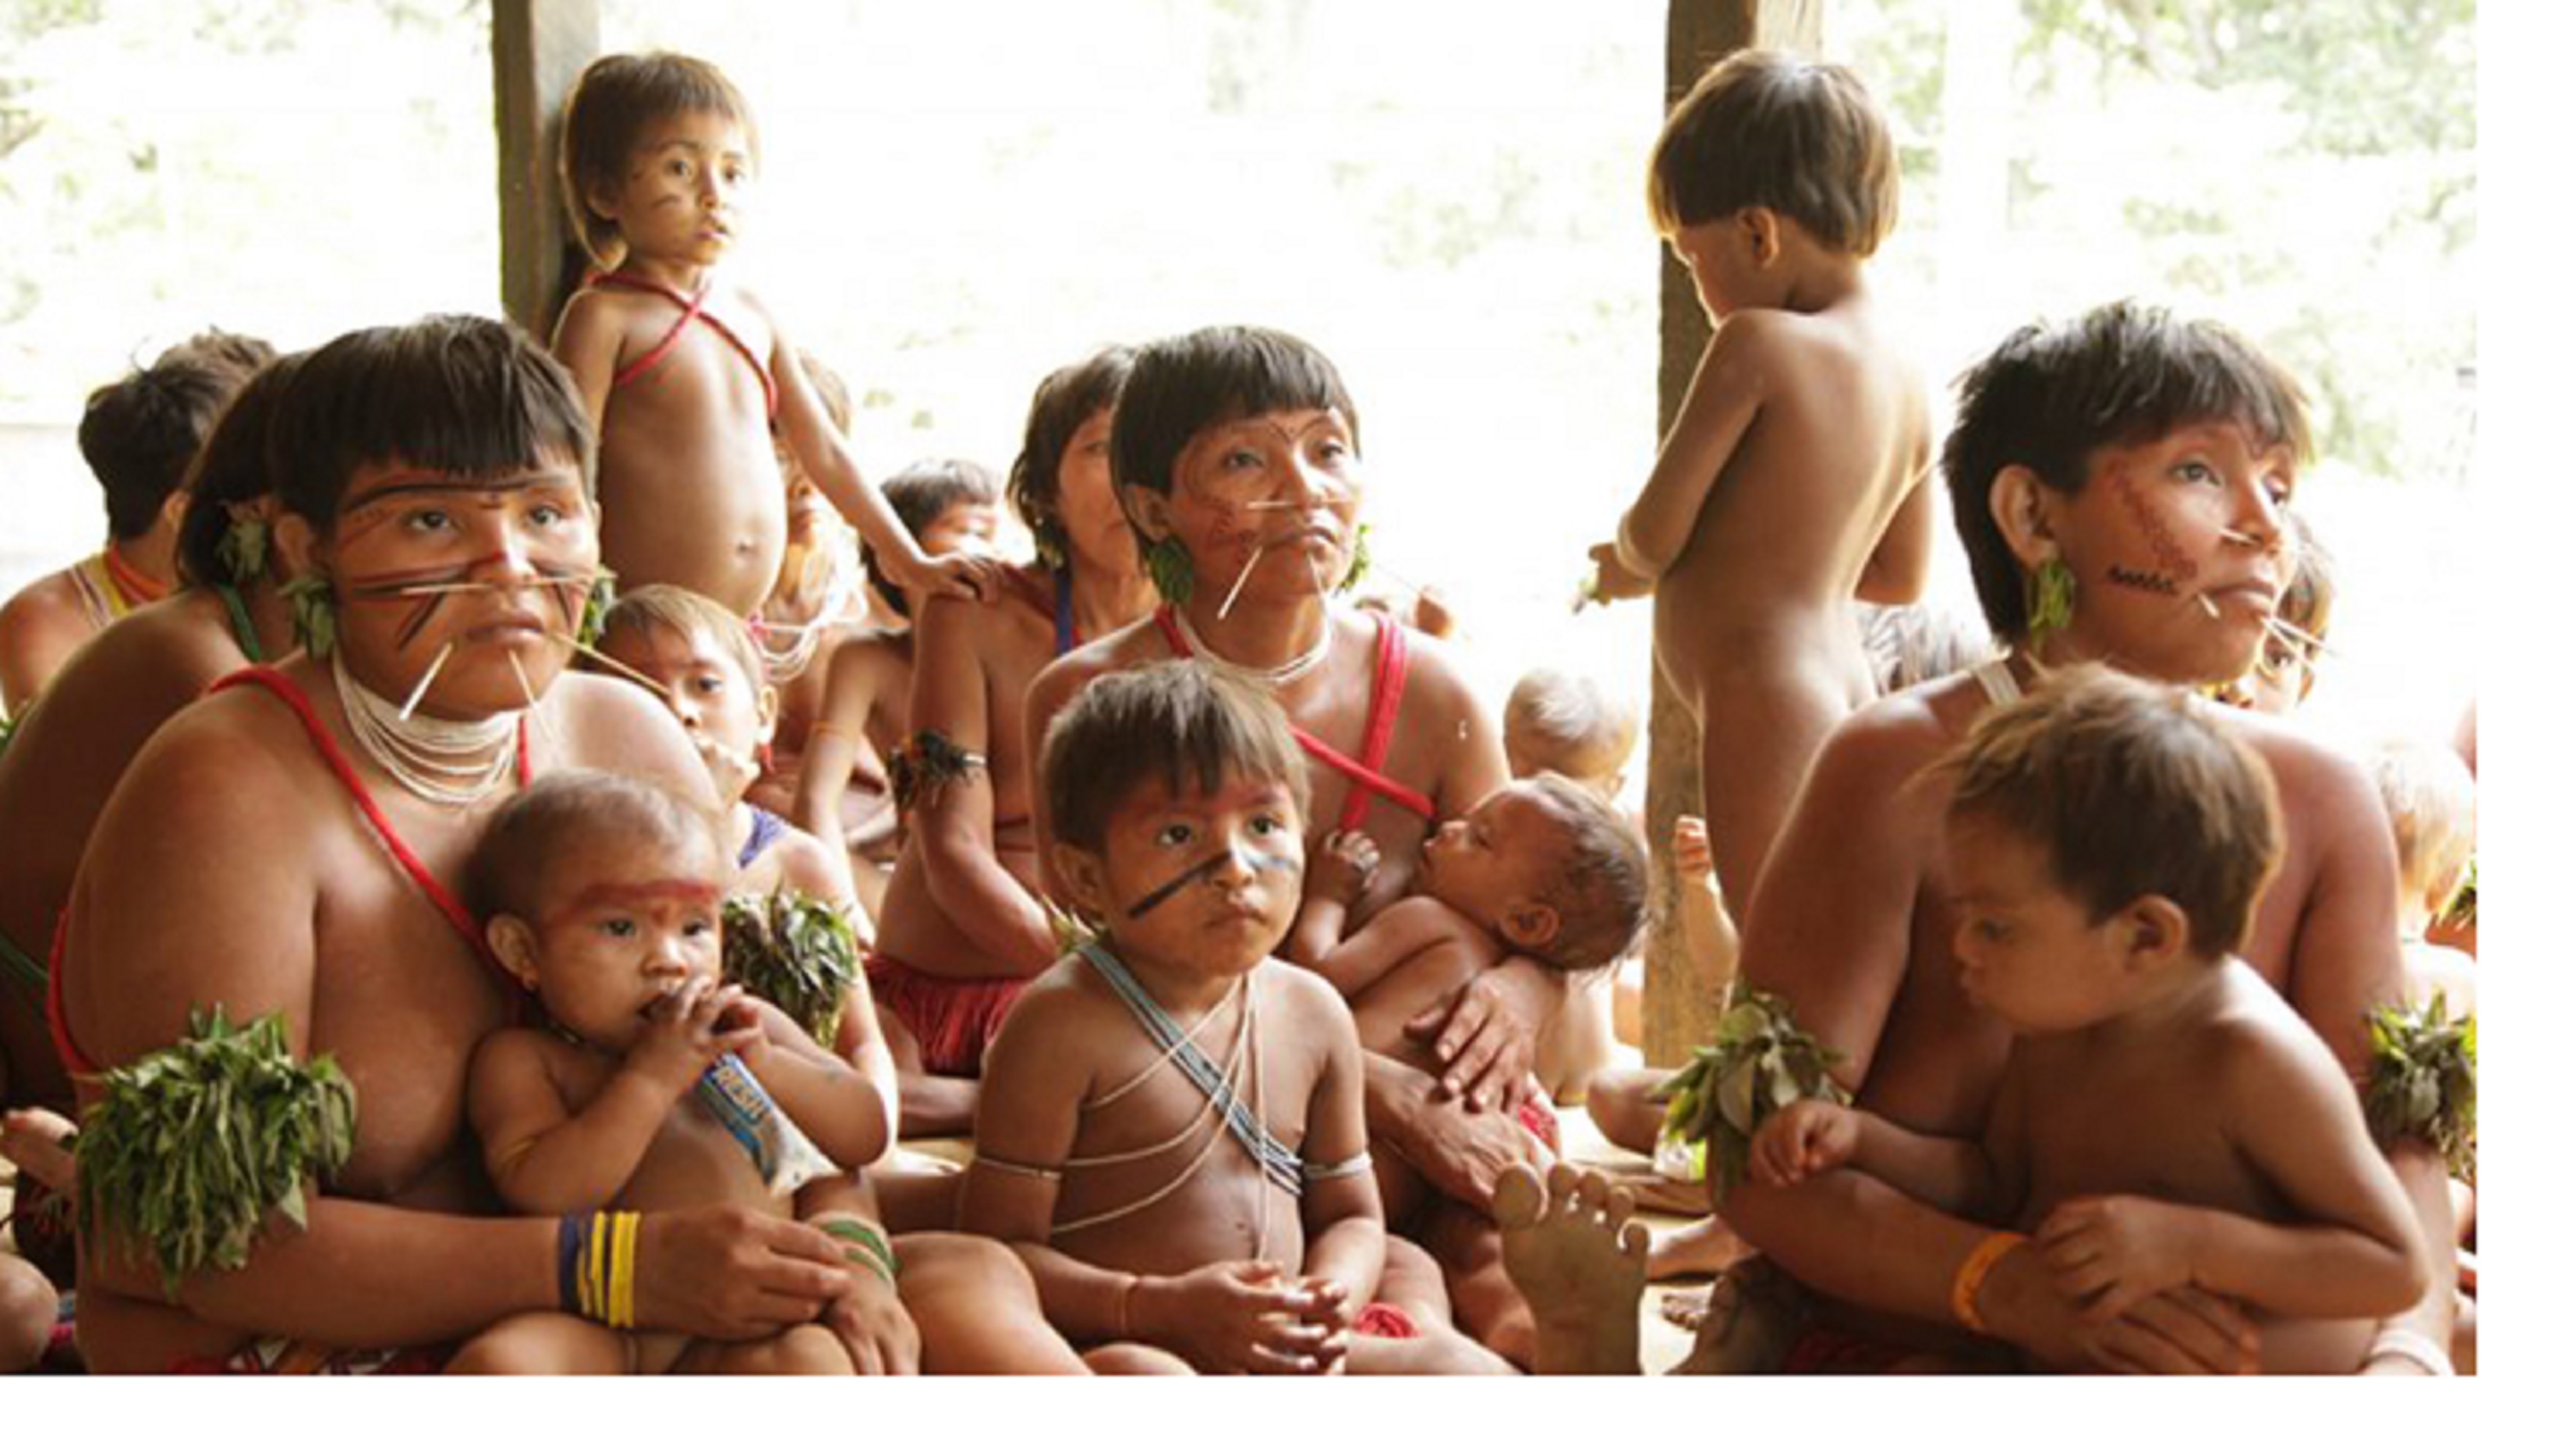 Brasil-pueblo indigena yanomami